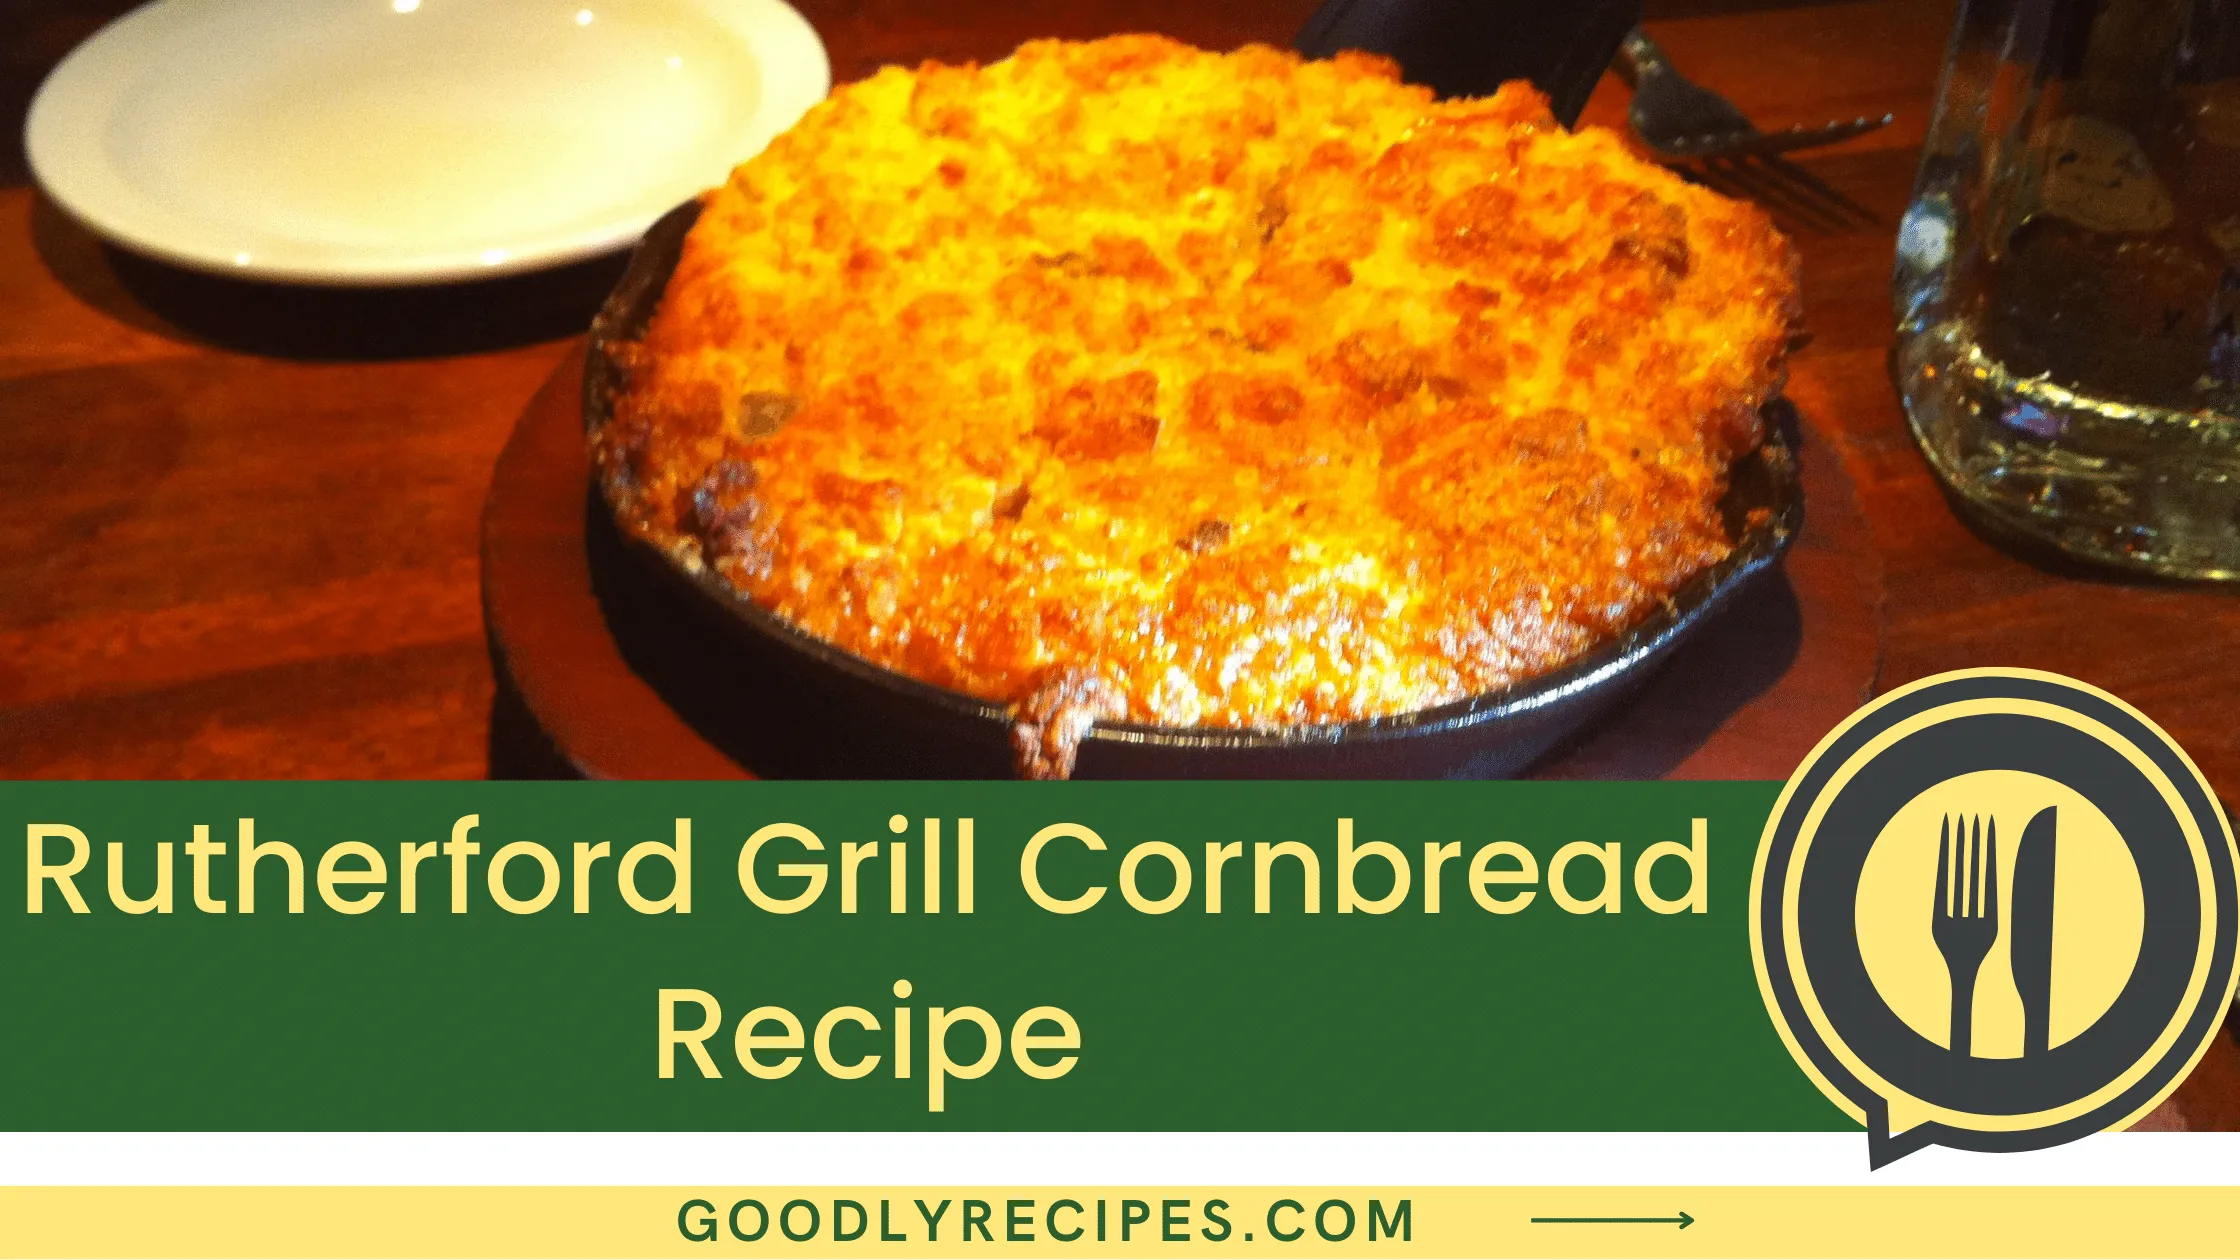 Rutherford Grill Cornbread Recipe